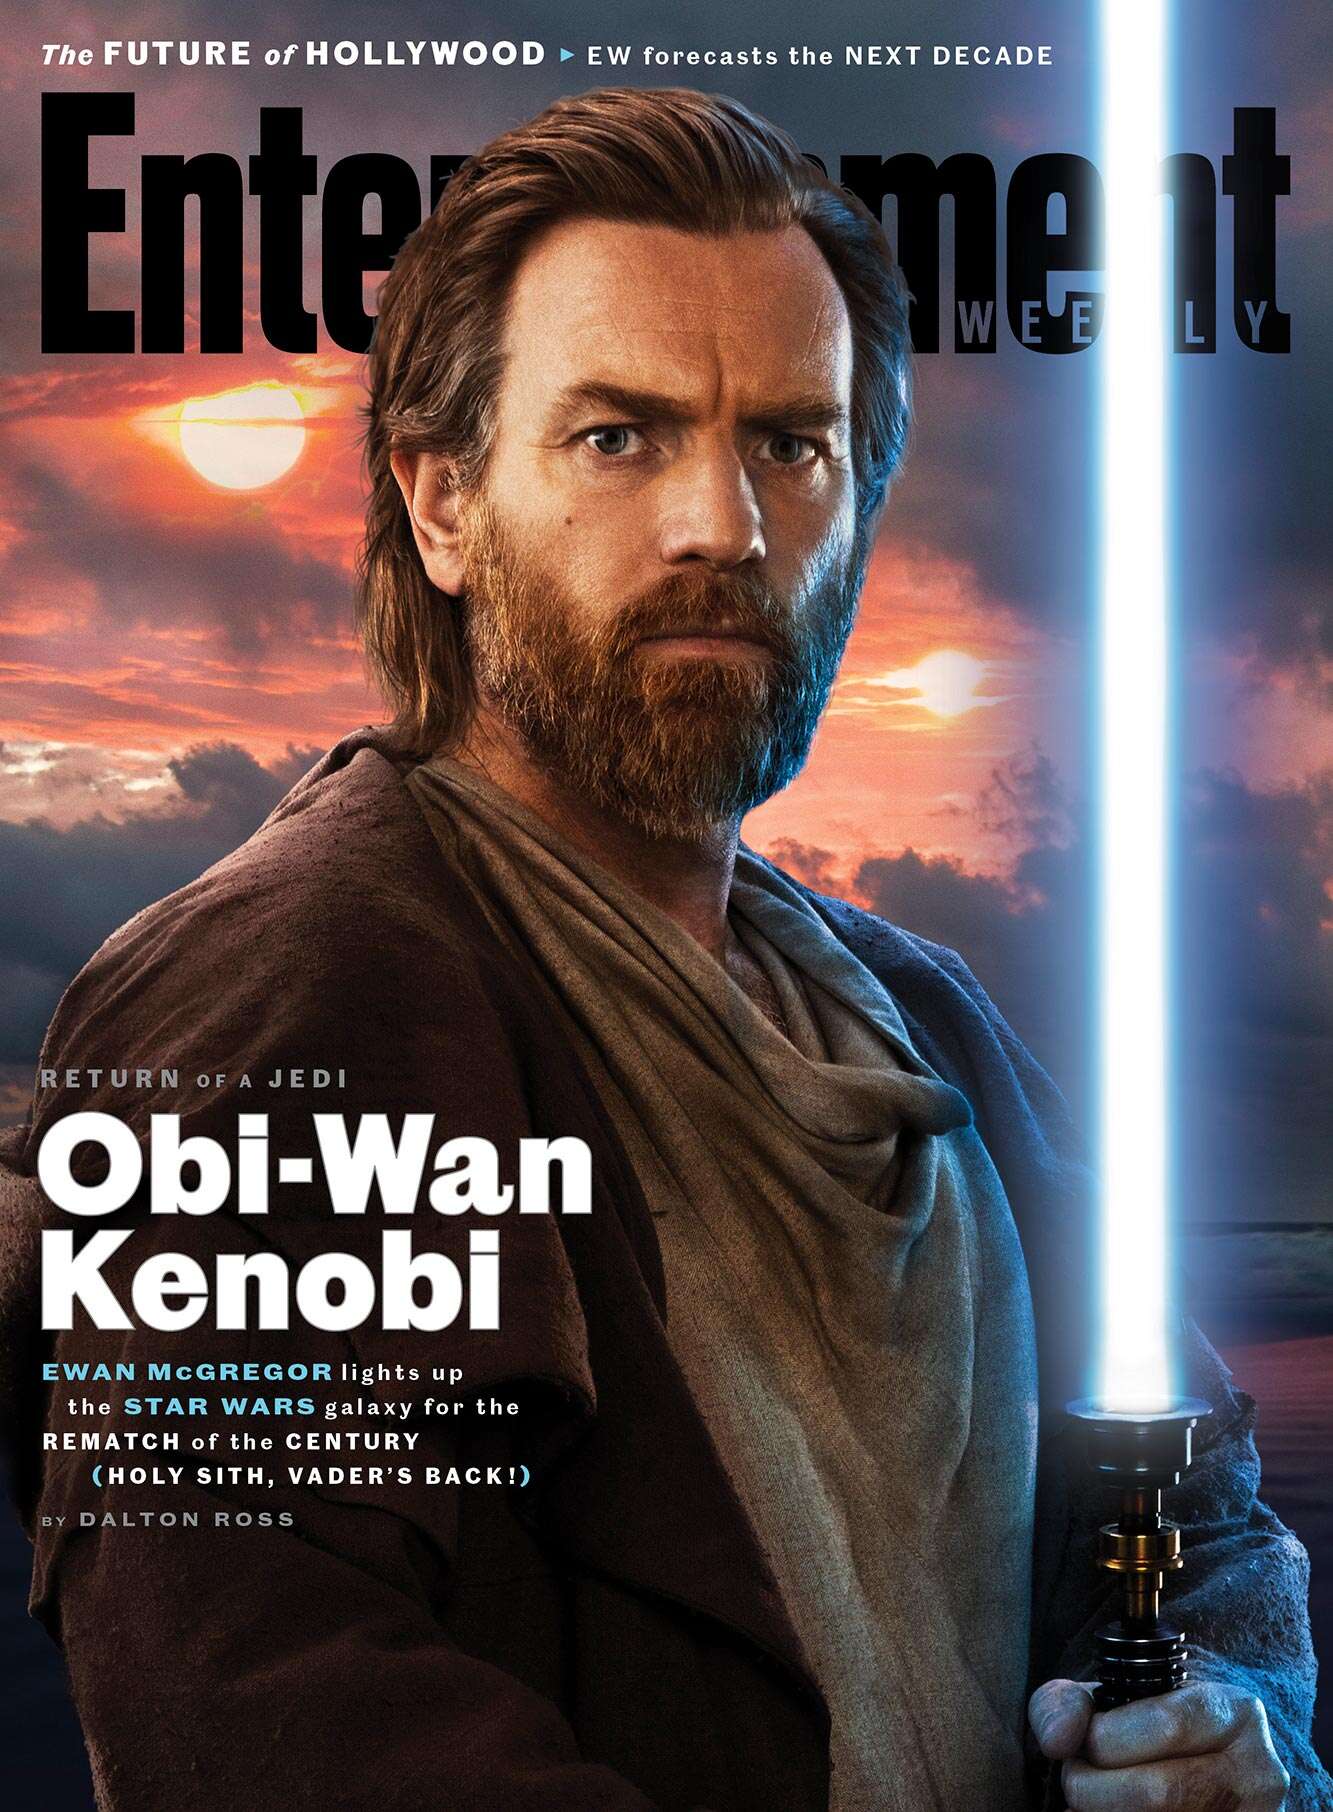 Obi Wan Kenobi Exclusive First Look Photo From The New Disney+ Series